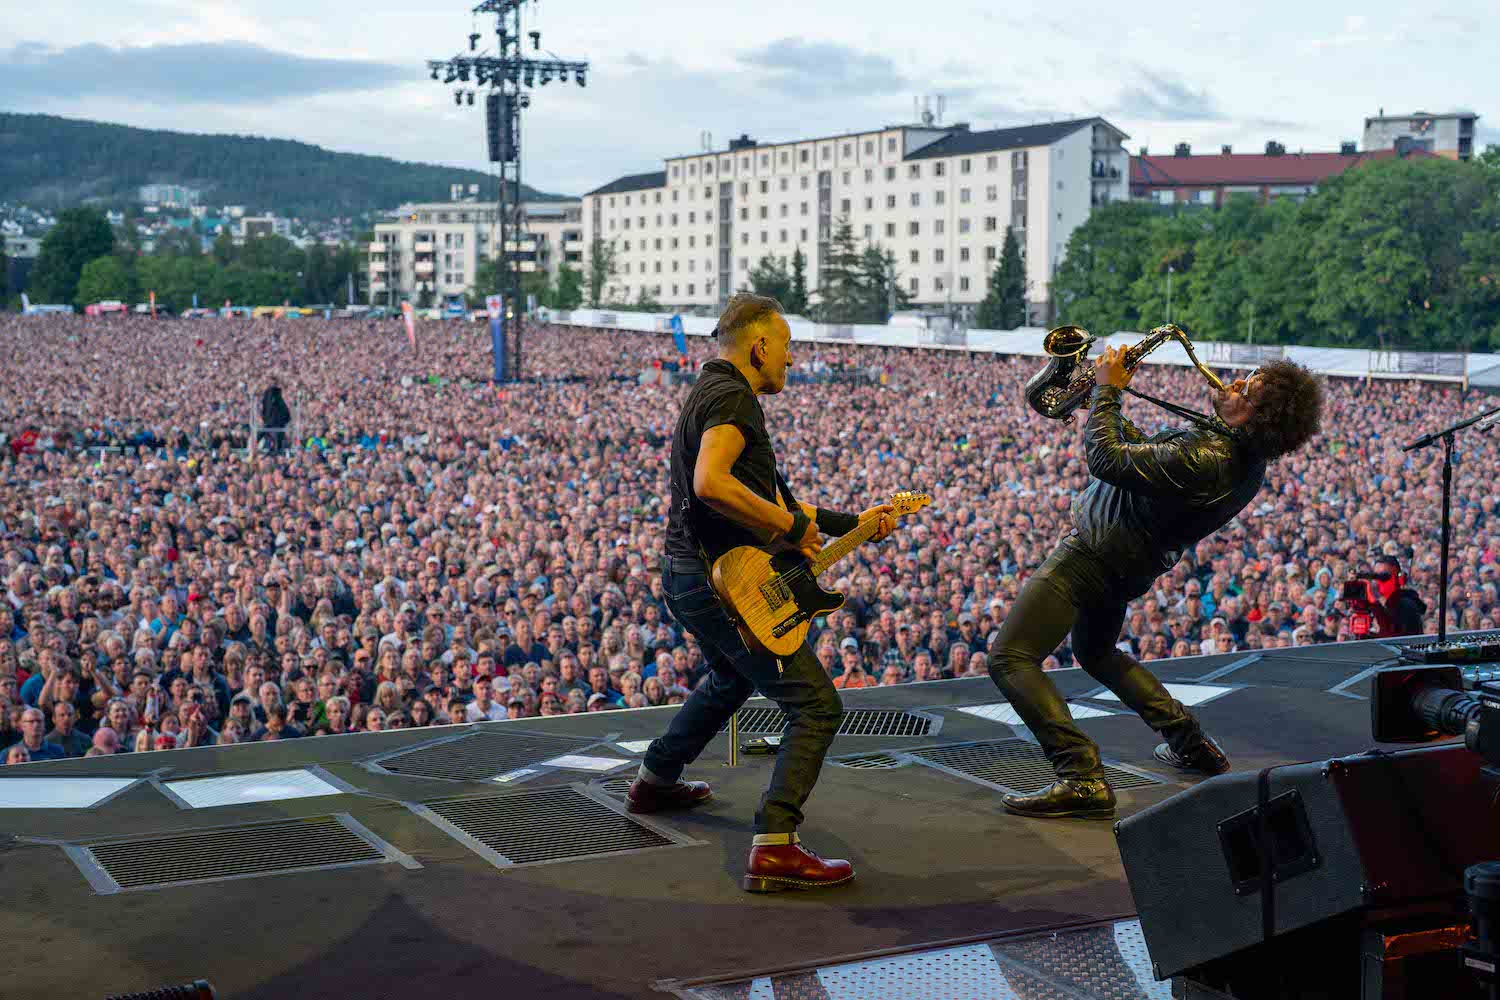 Bruce Springsteen & E Street Band at Voldsløkka, Oslo, Norway on July 2.